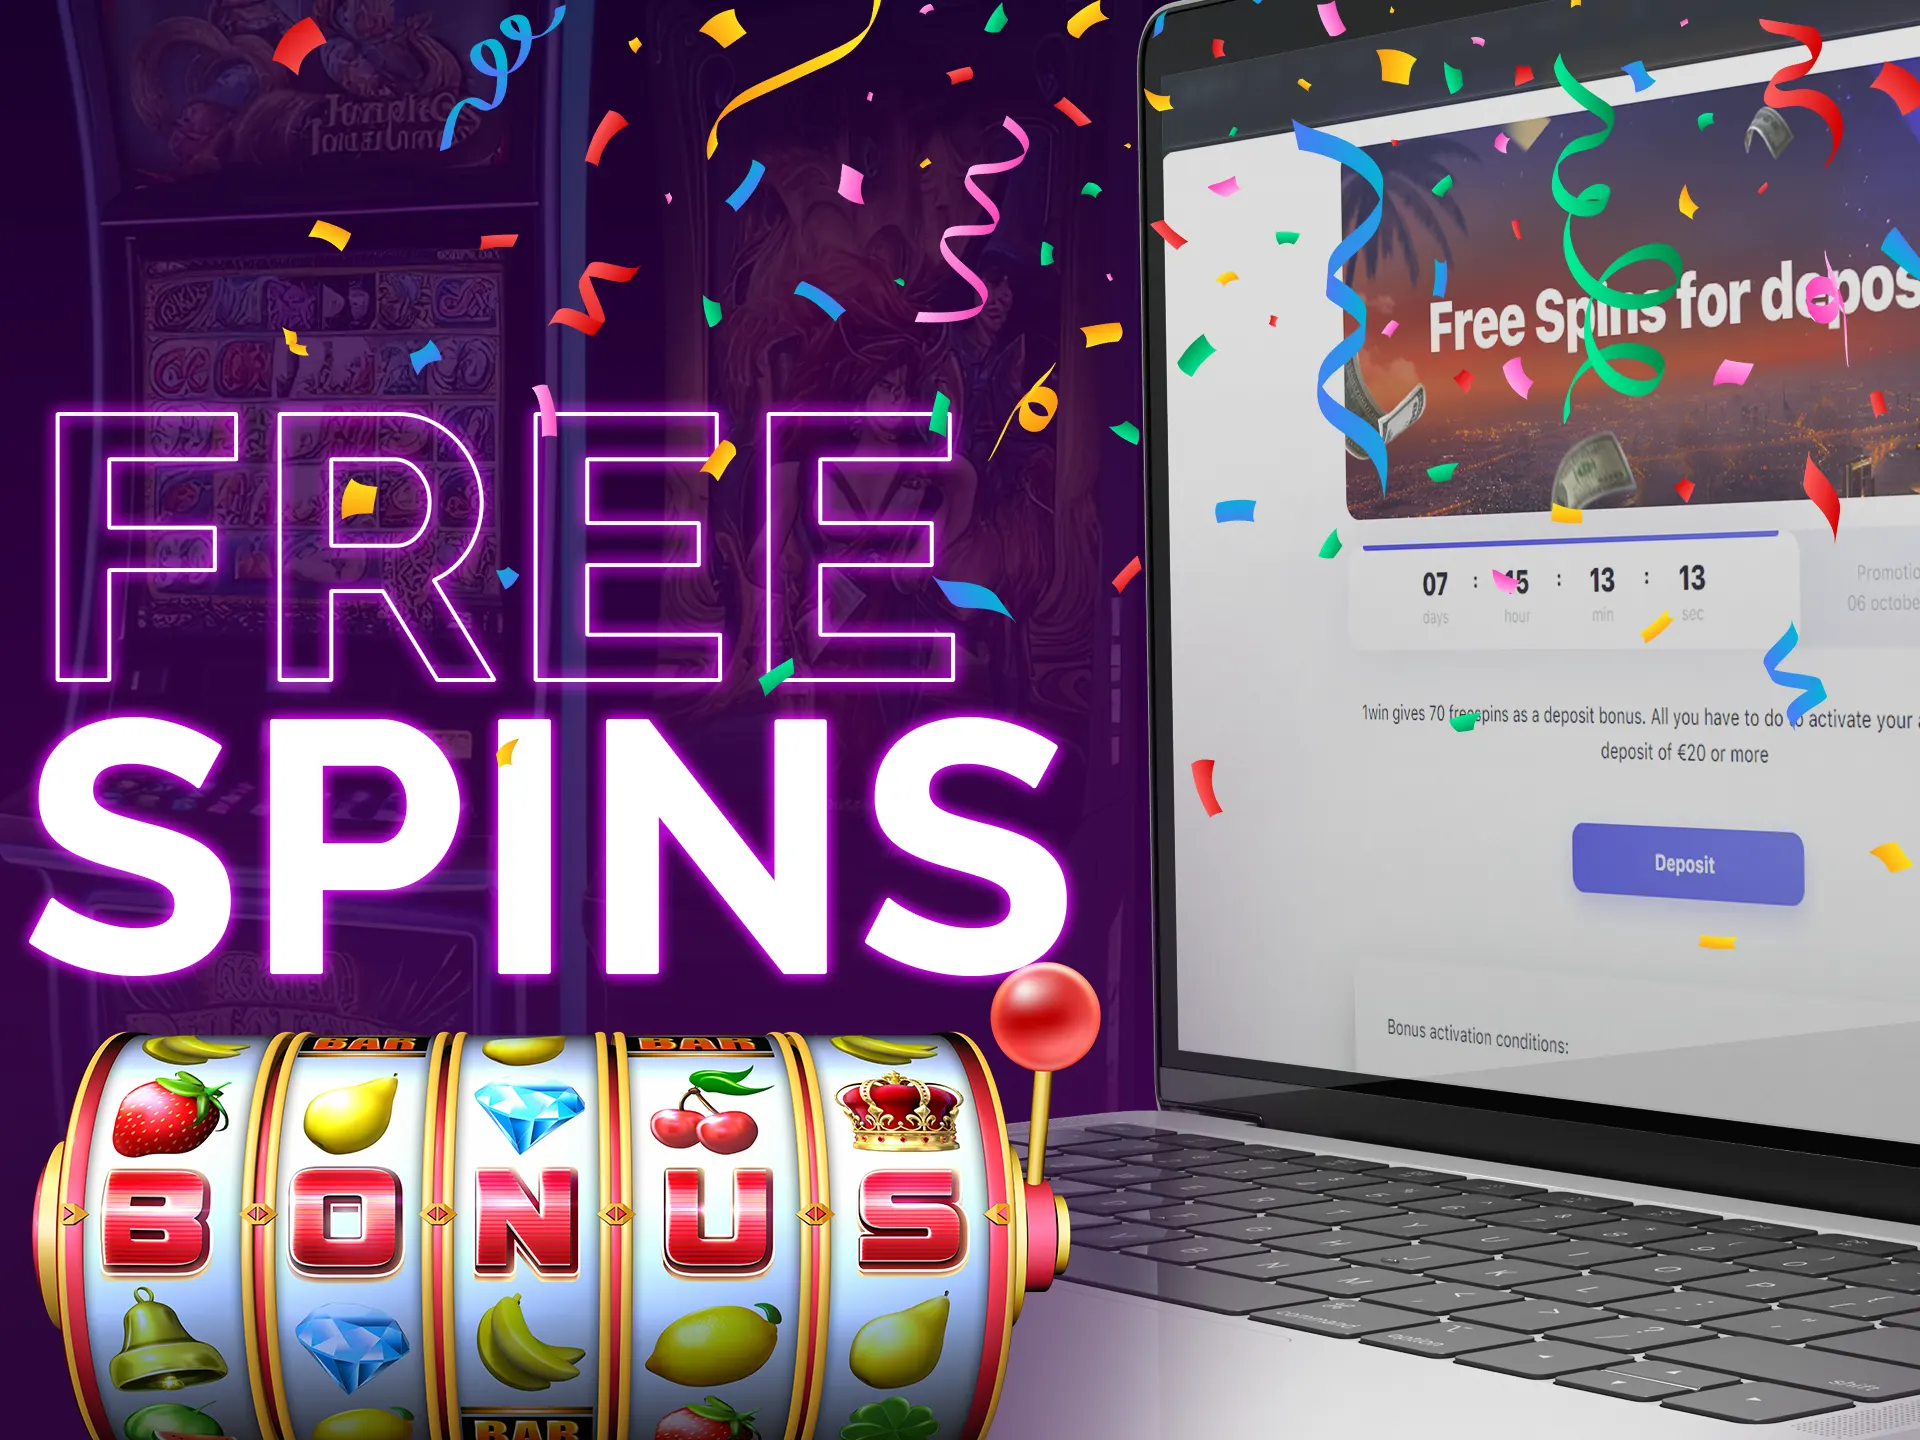 Get your free spins with deposit bonus!